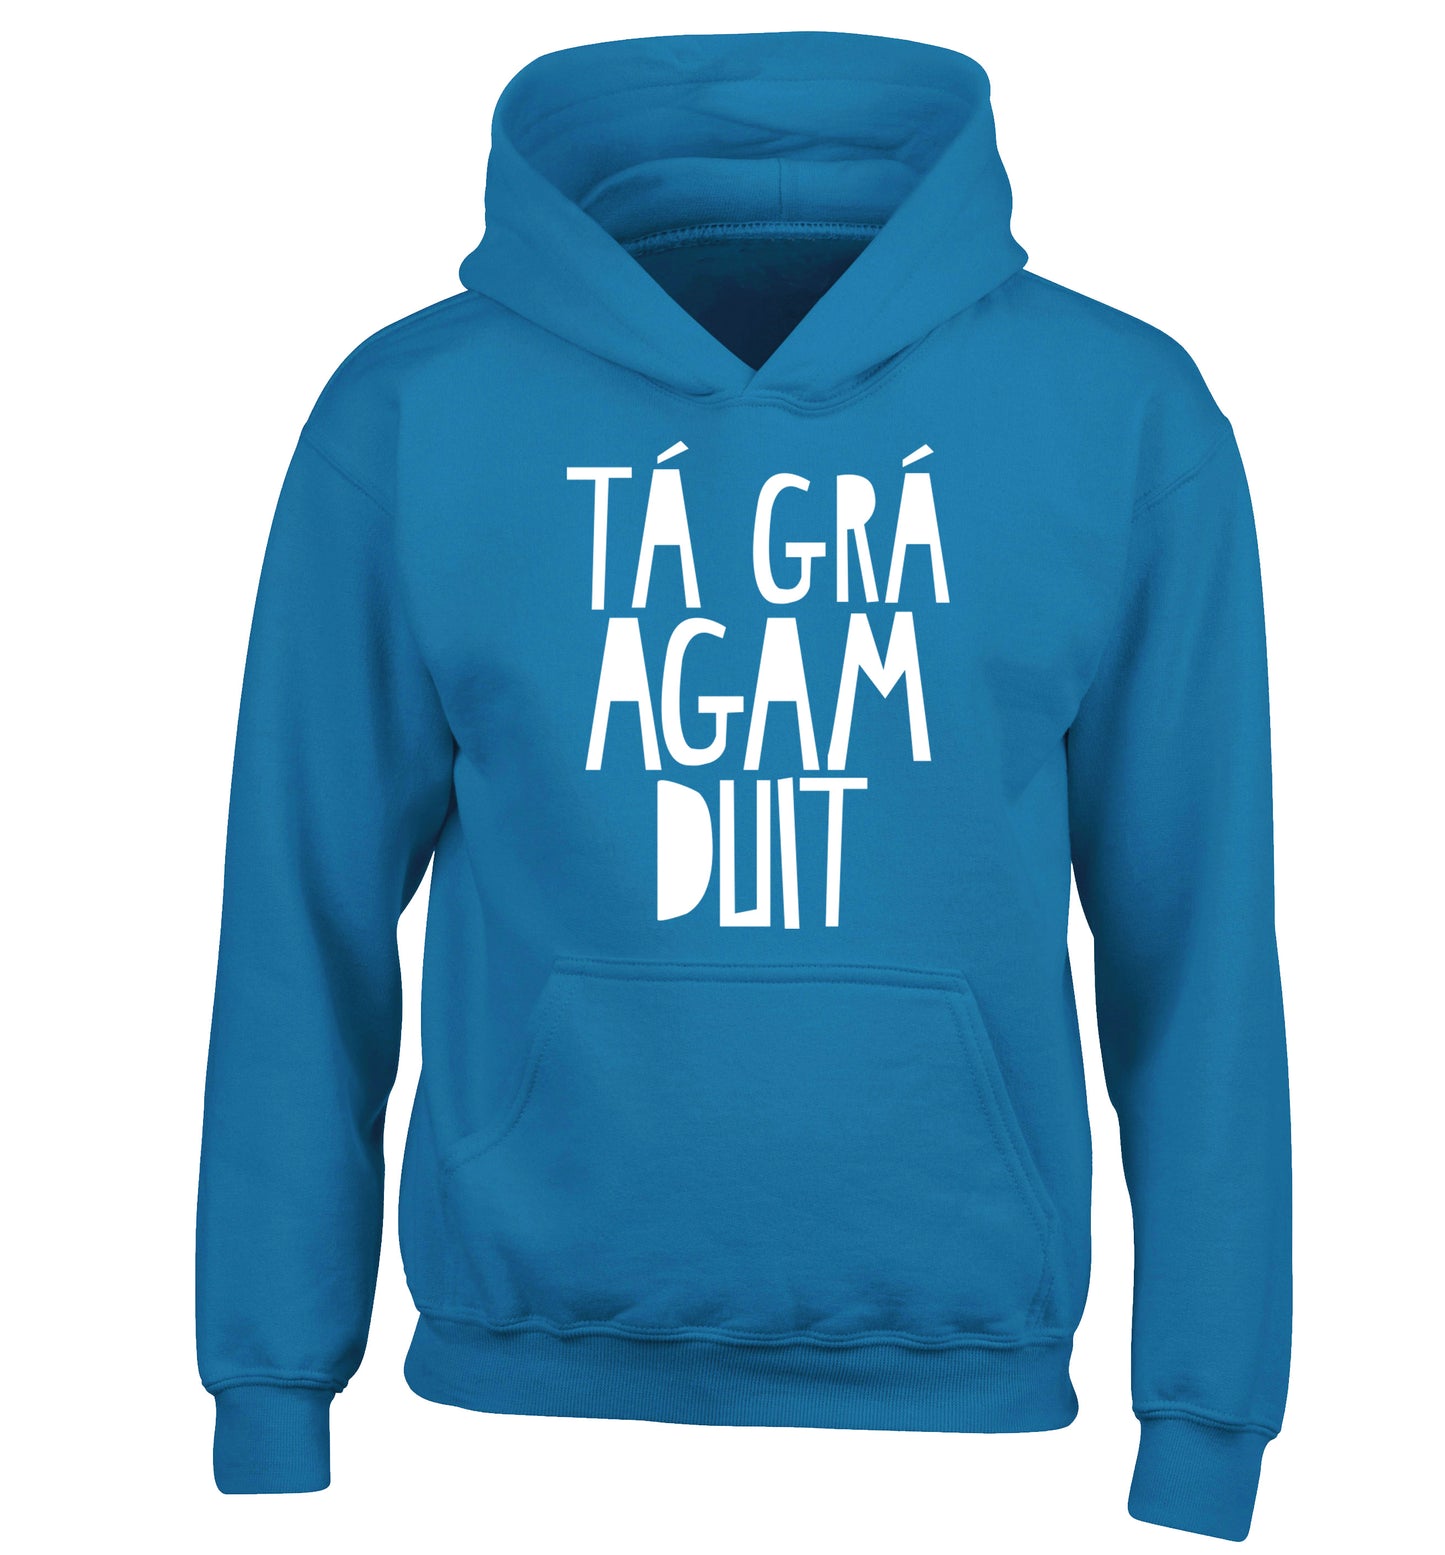 T‚Ä° gr‚Ä° agam duit - I love you children's blue hoodie 12-13 Years